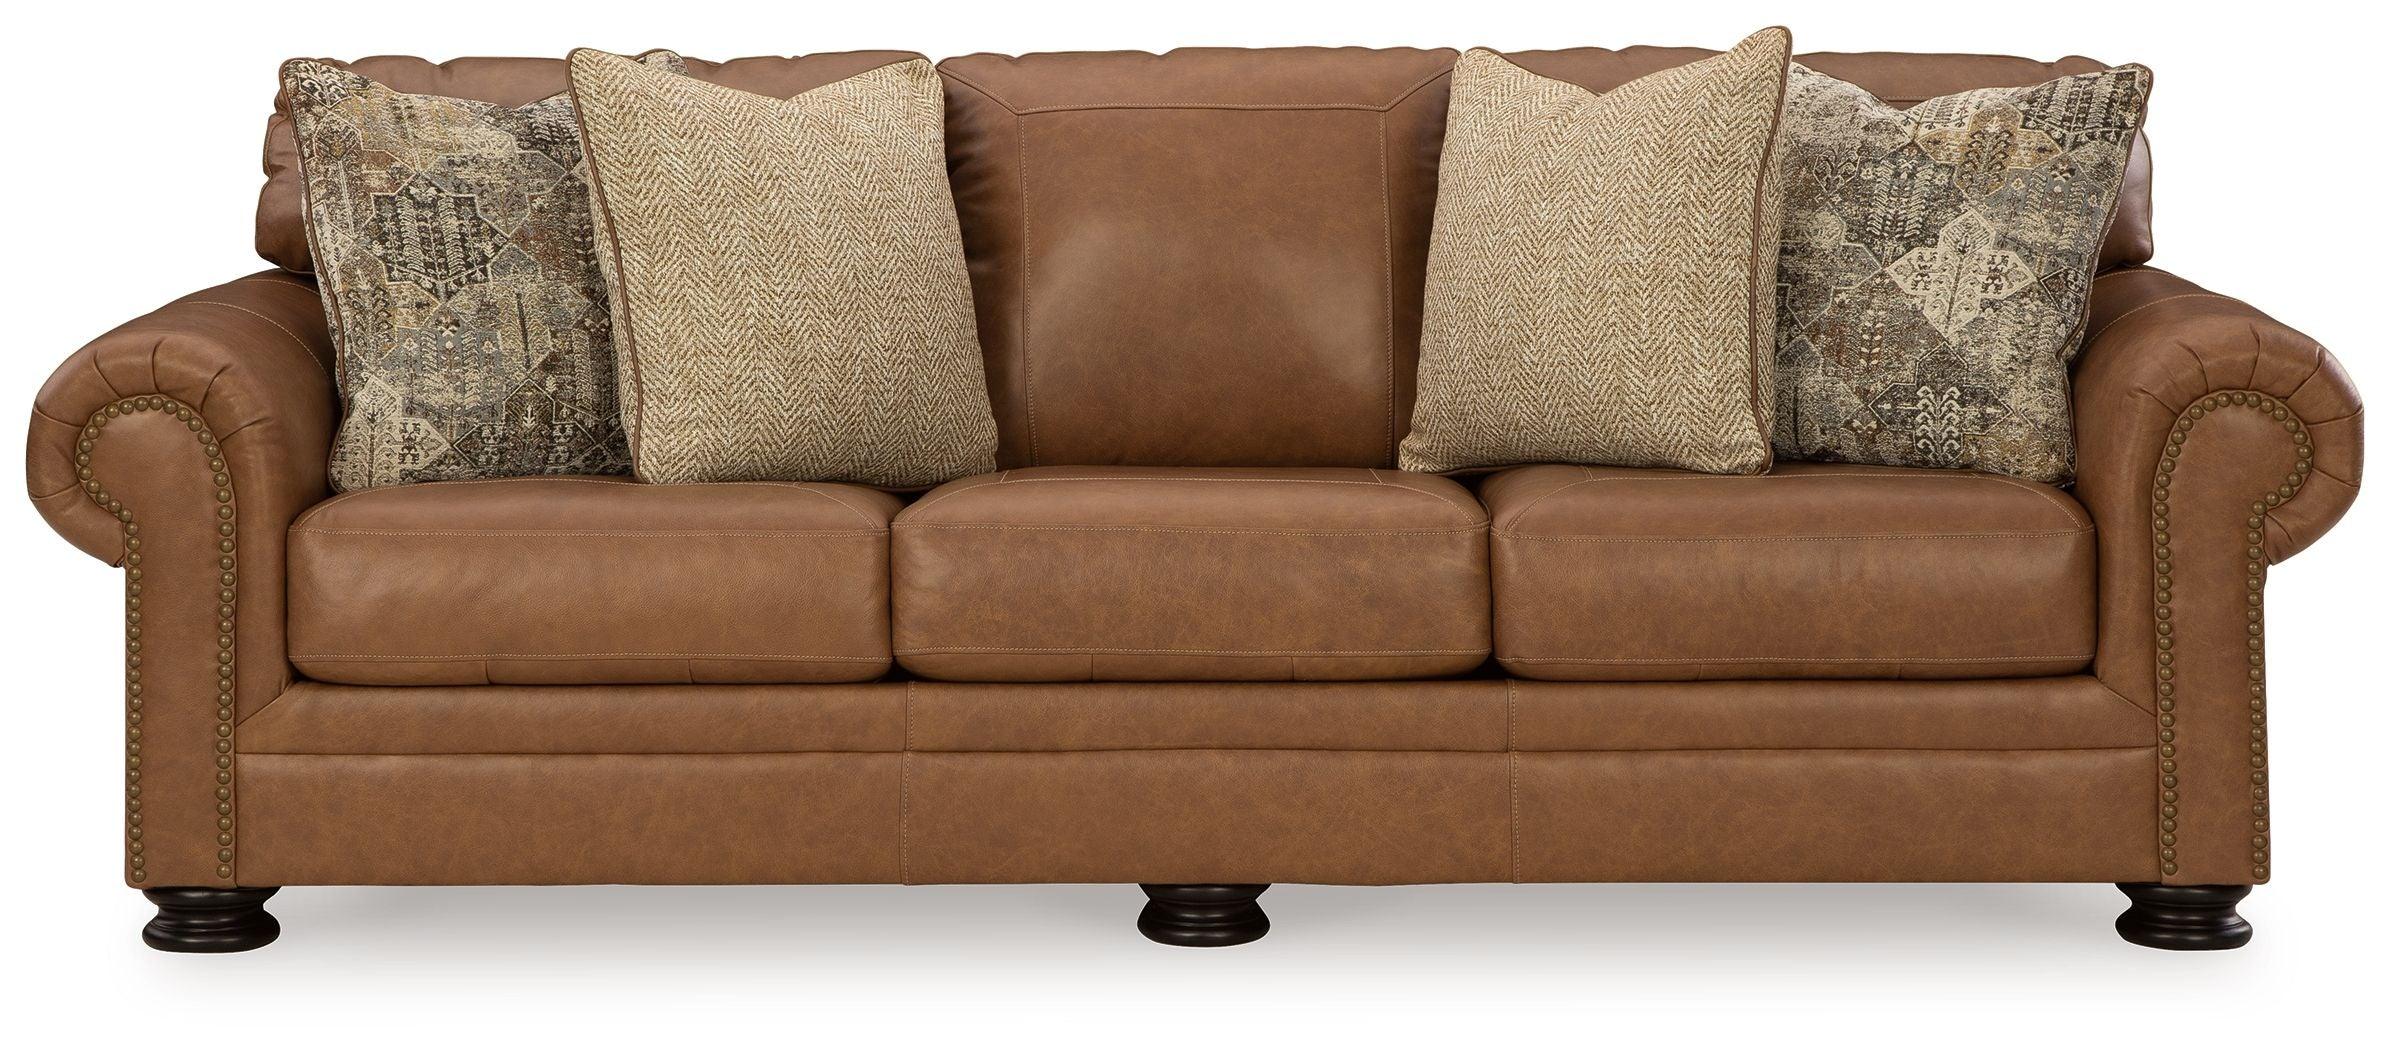 Signature Design by Ashley® - Carianna - Caramel - Queen Sofa Sleeper - 5th Avenue Furniture